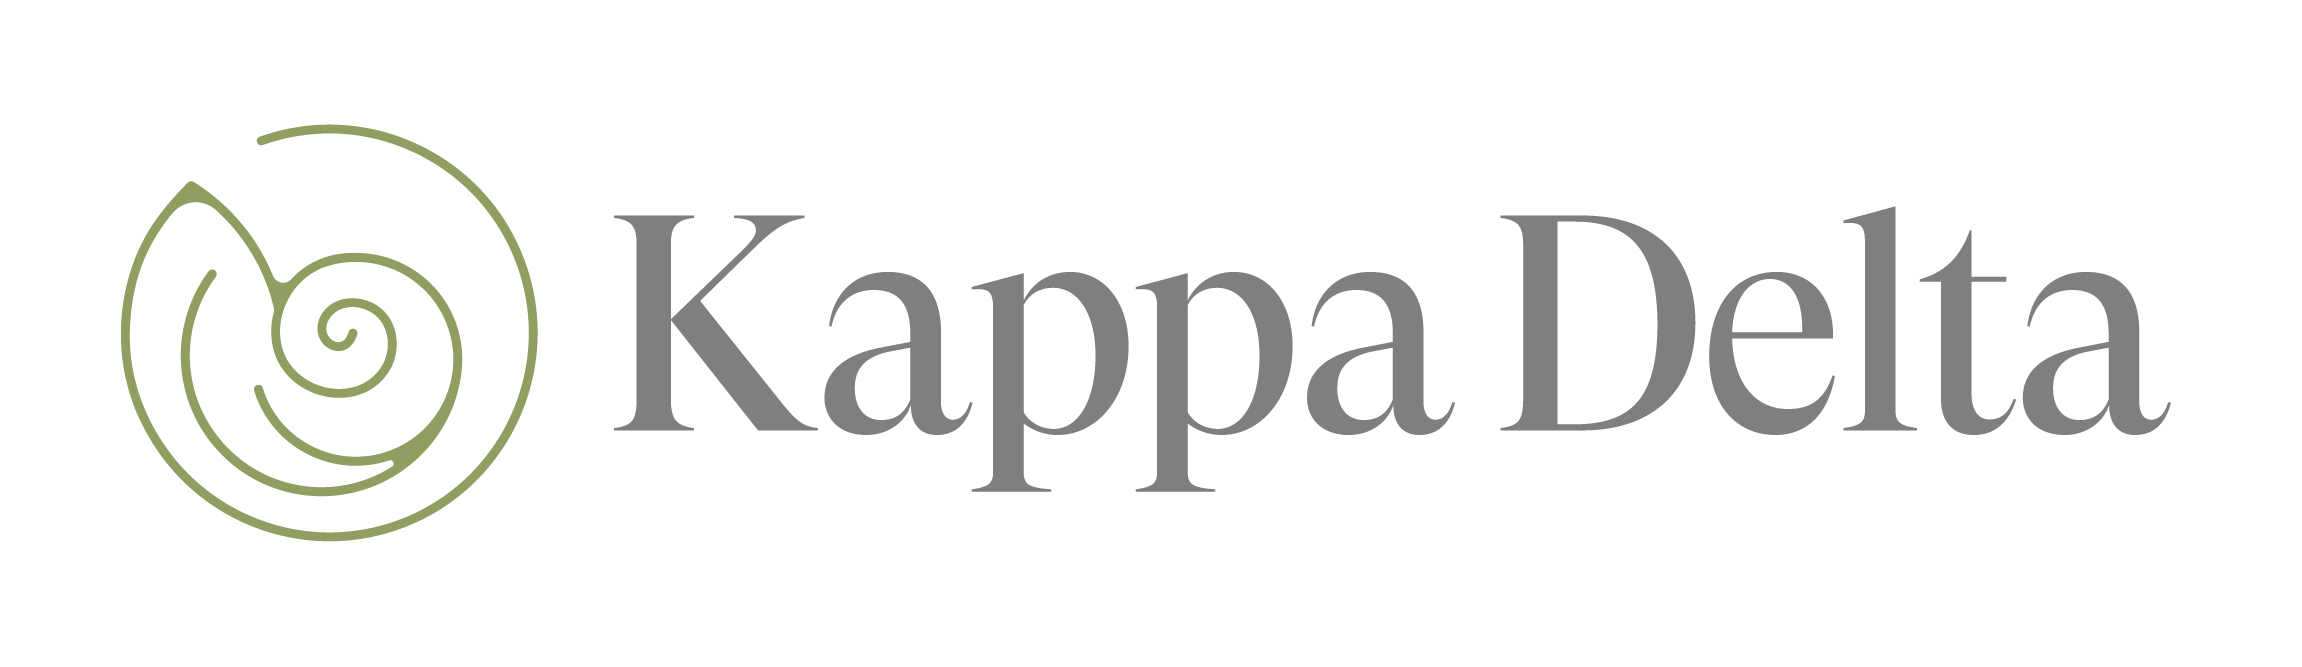 Kappa Delta logo